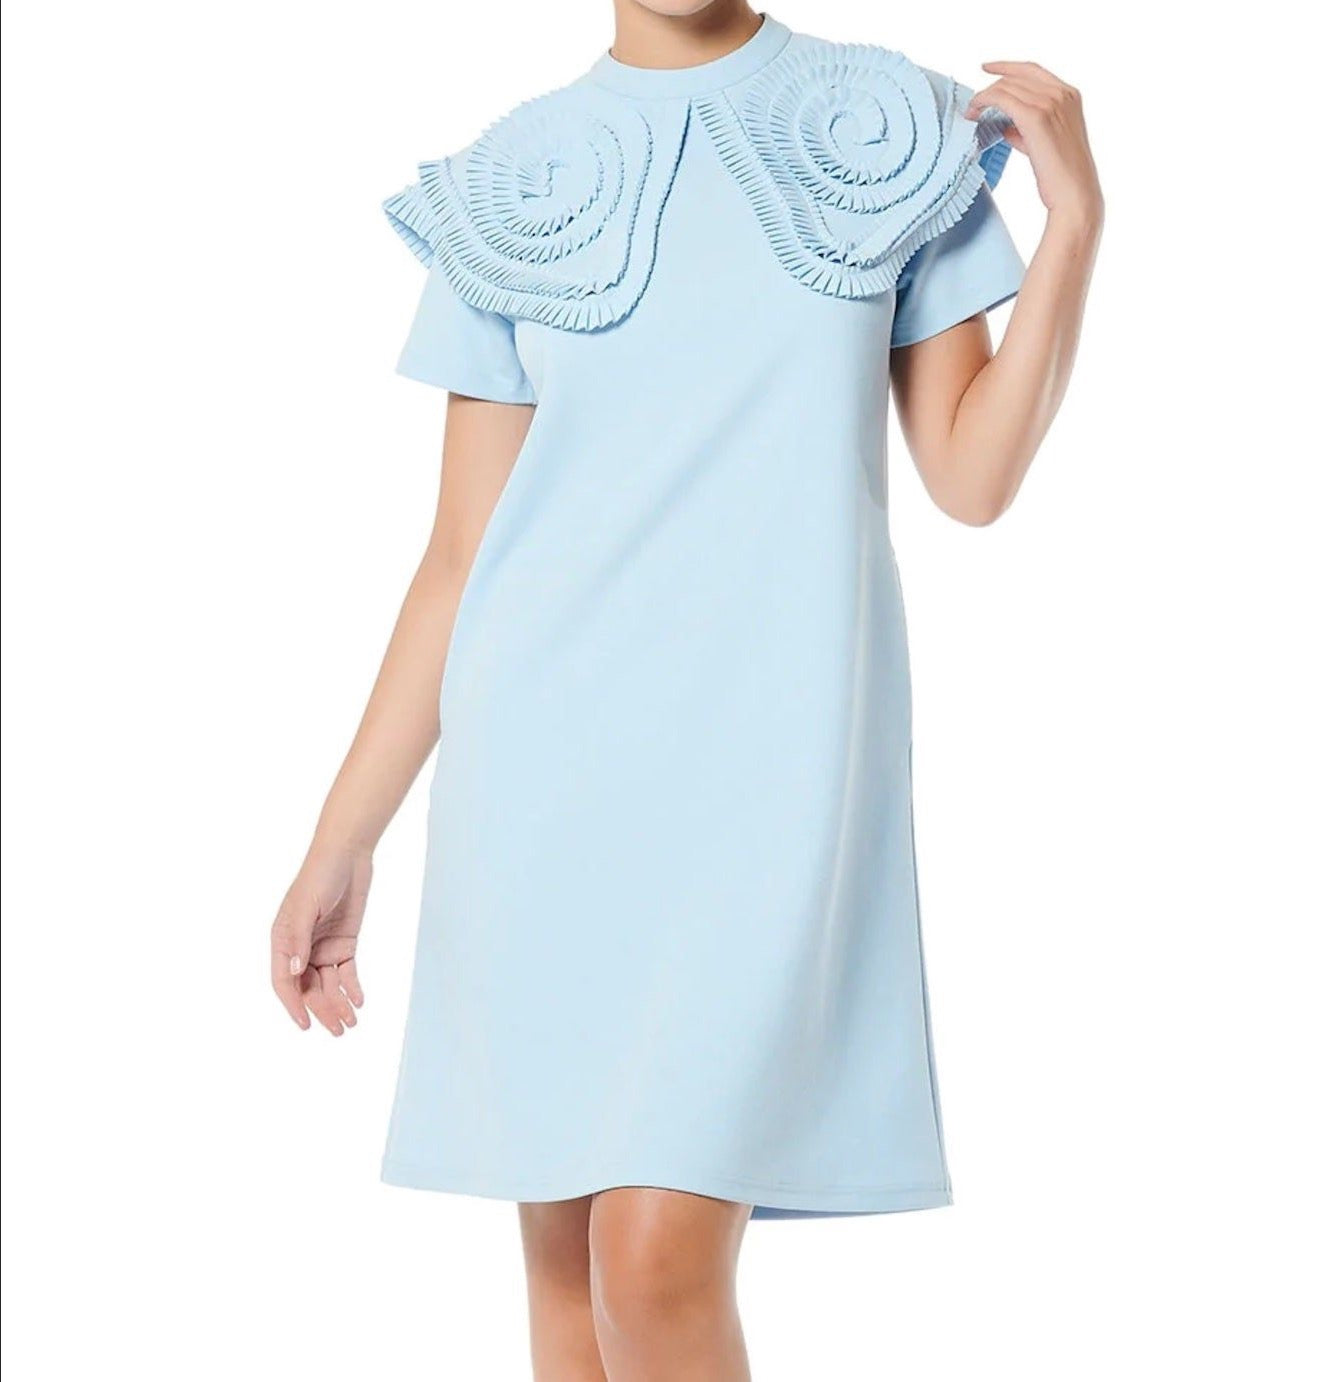 Cap Sleeve Shirt Dress With 3D Ruffled Appliqués - BTK COLLECTION